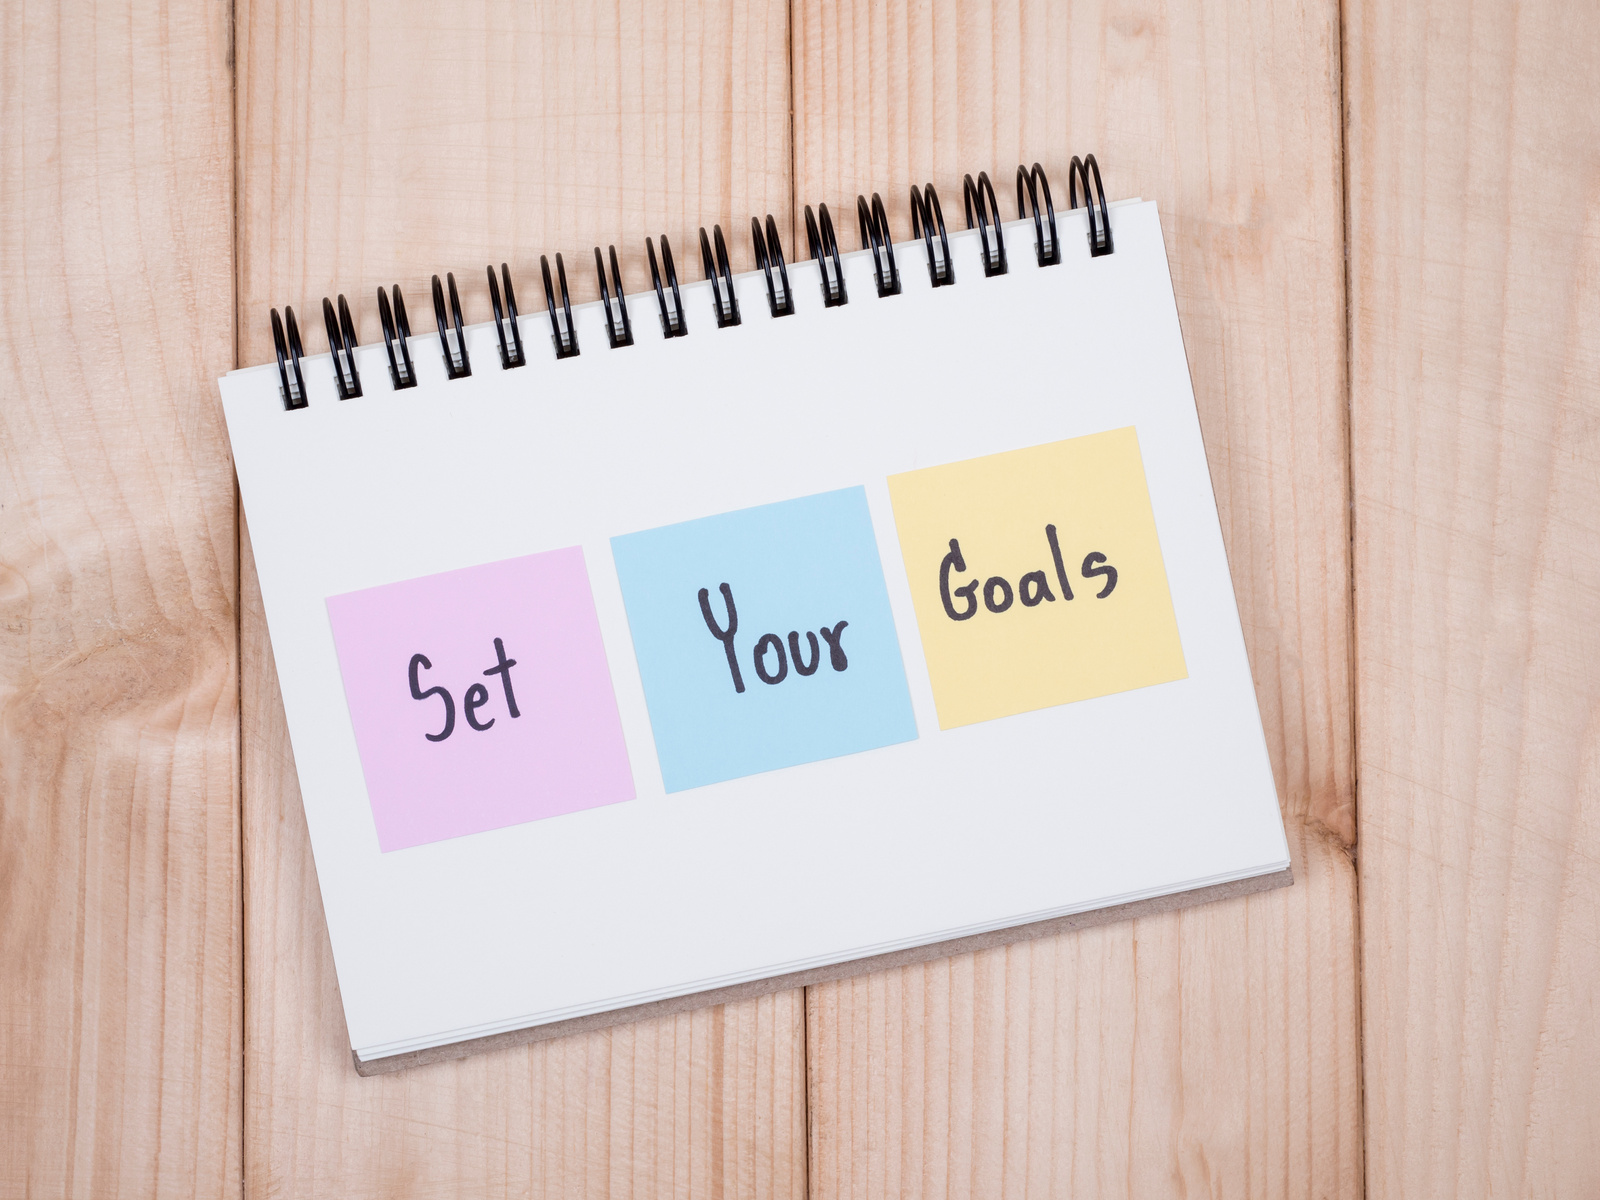 Set your goals 7